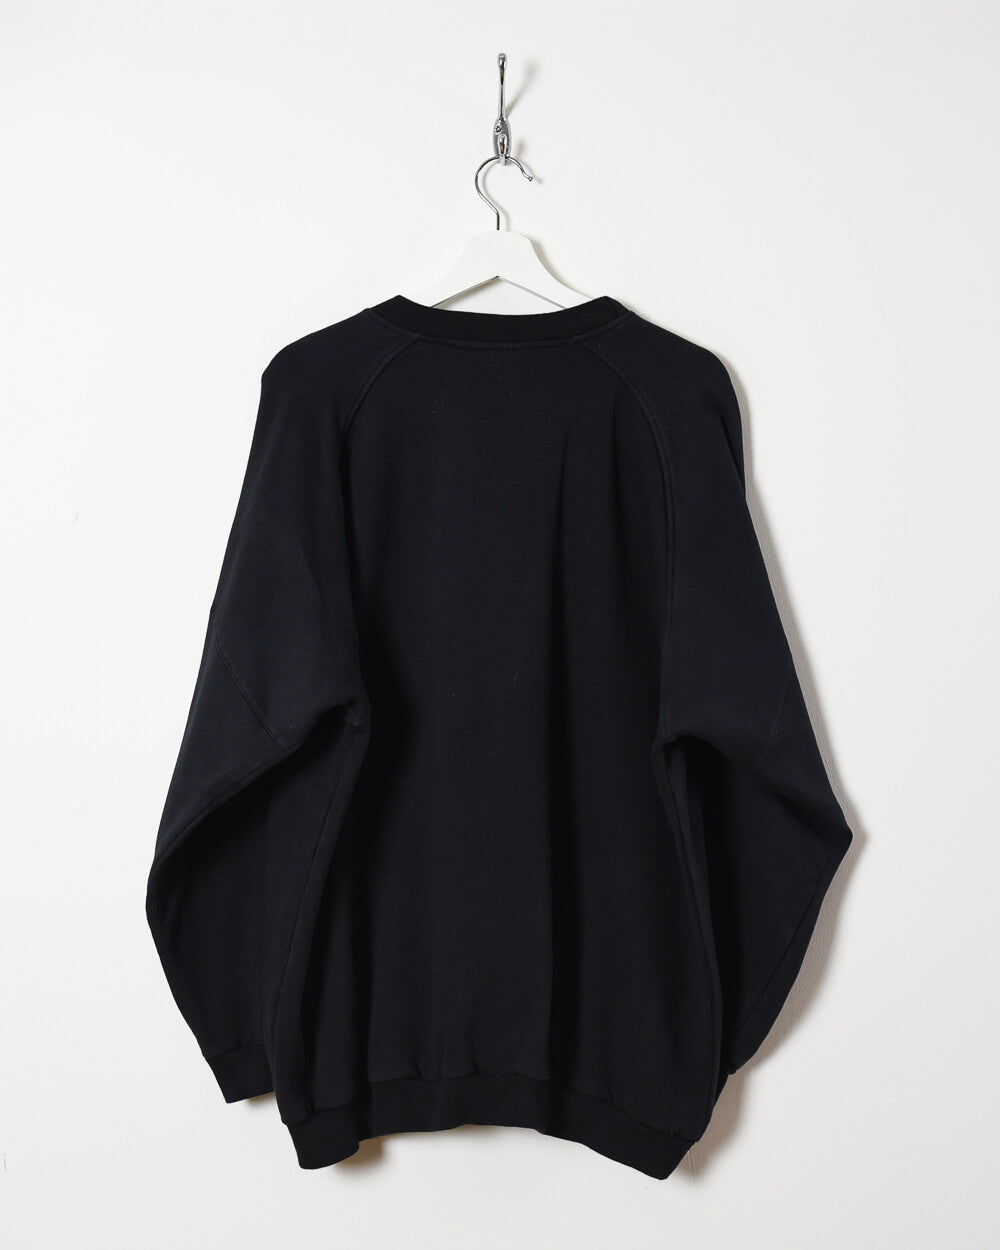 Black Kappa Sweatshirt - X-Large